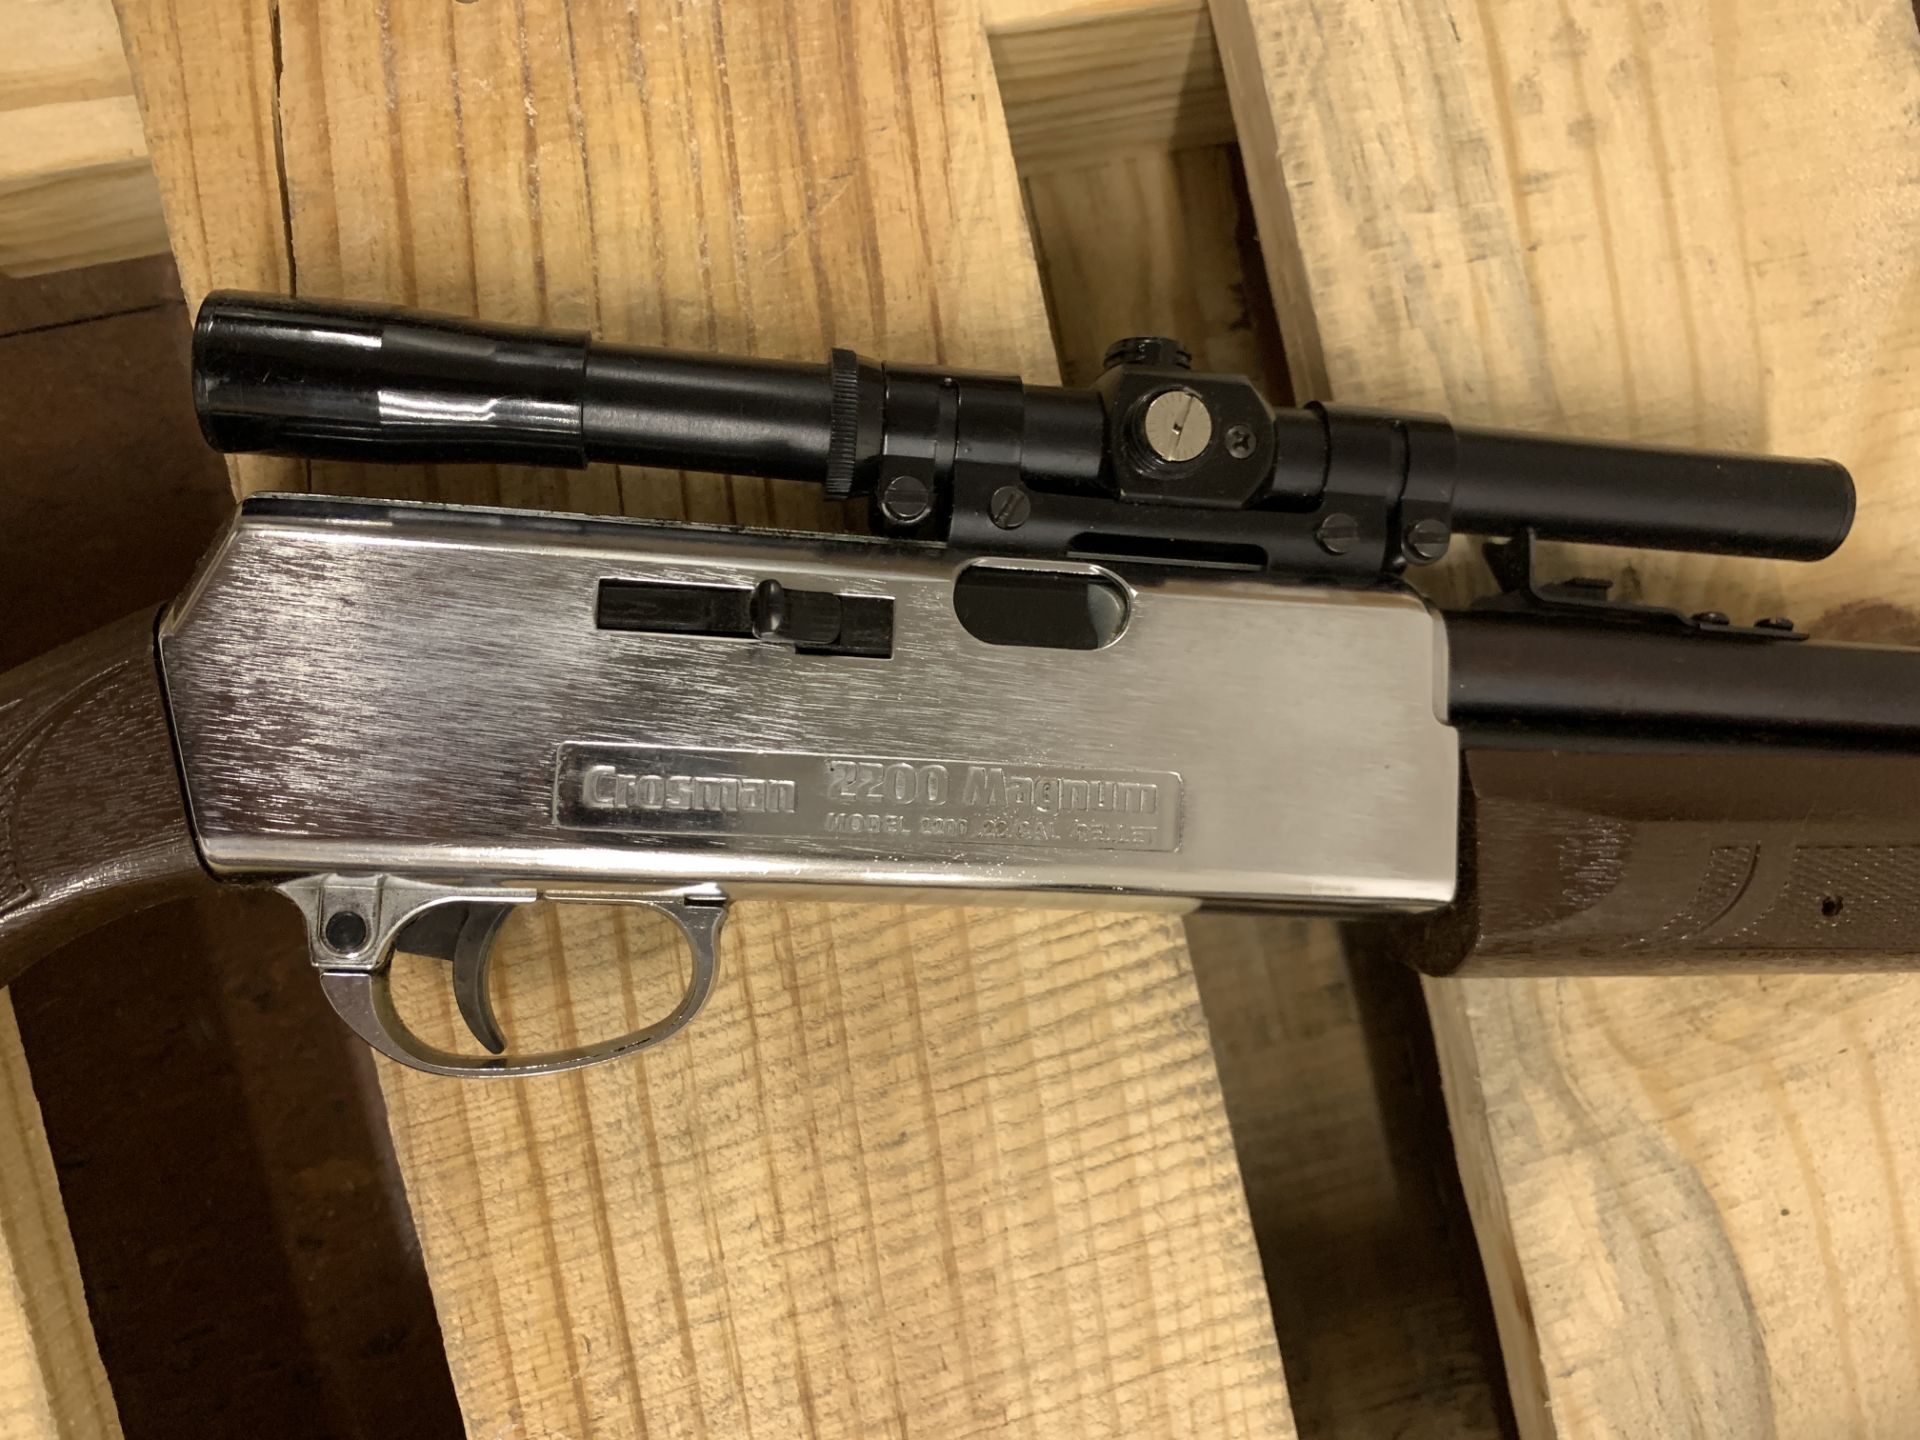 Vintage Crosman 2200 Magnum .22 Caliber Pellet Airgun With Sight And Case - Image 2 of 4